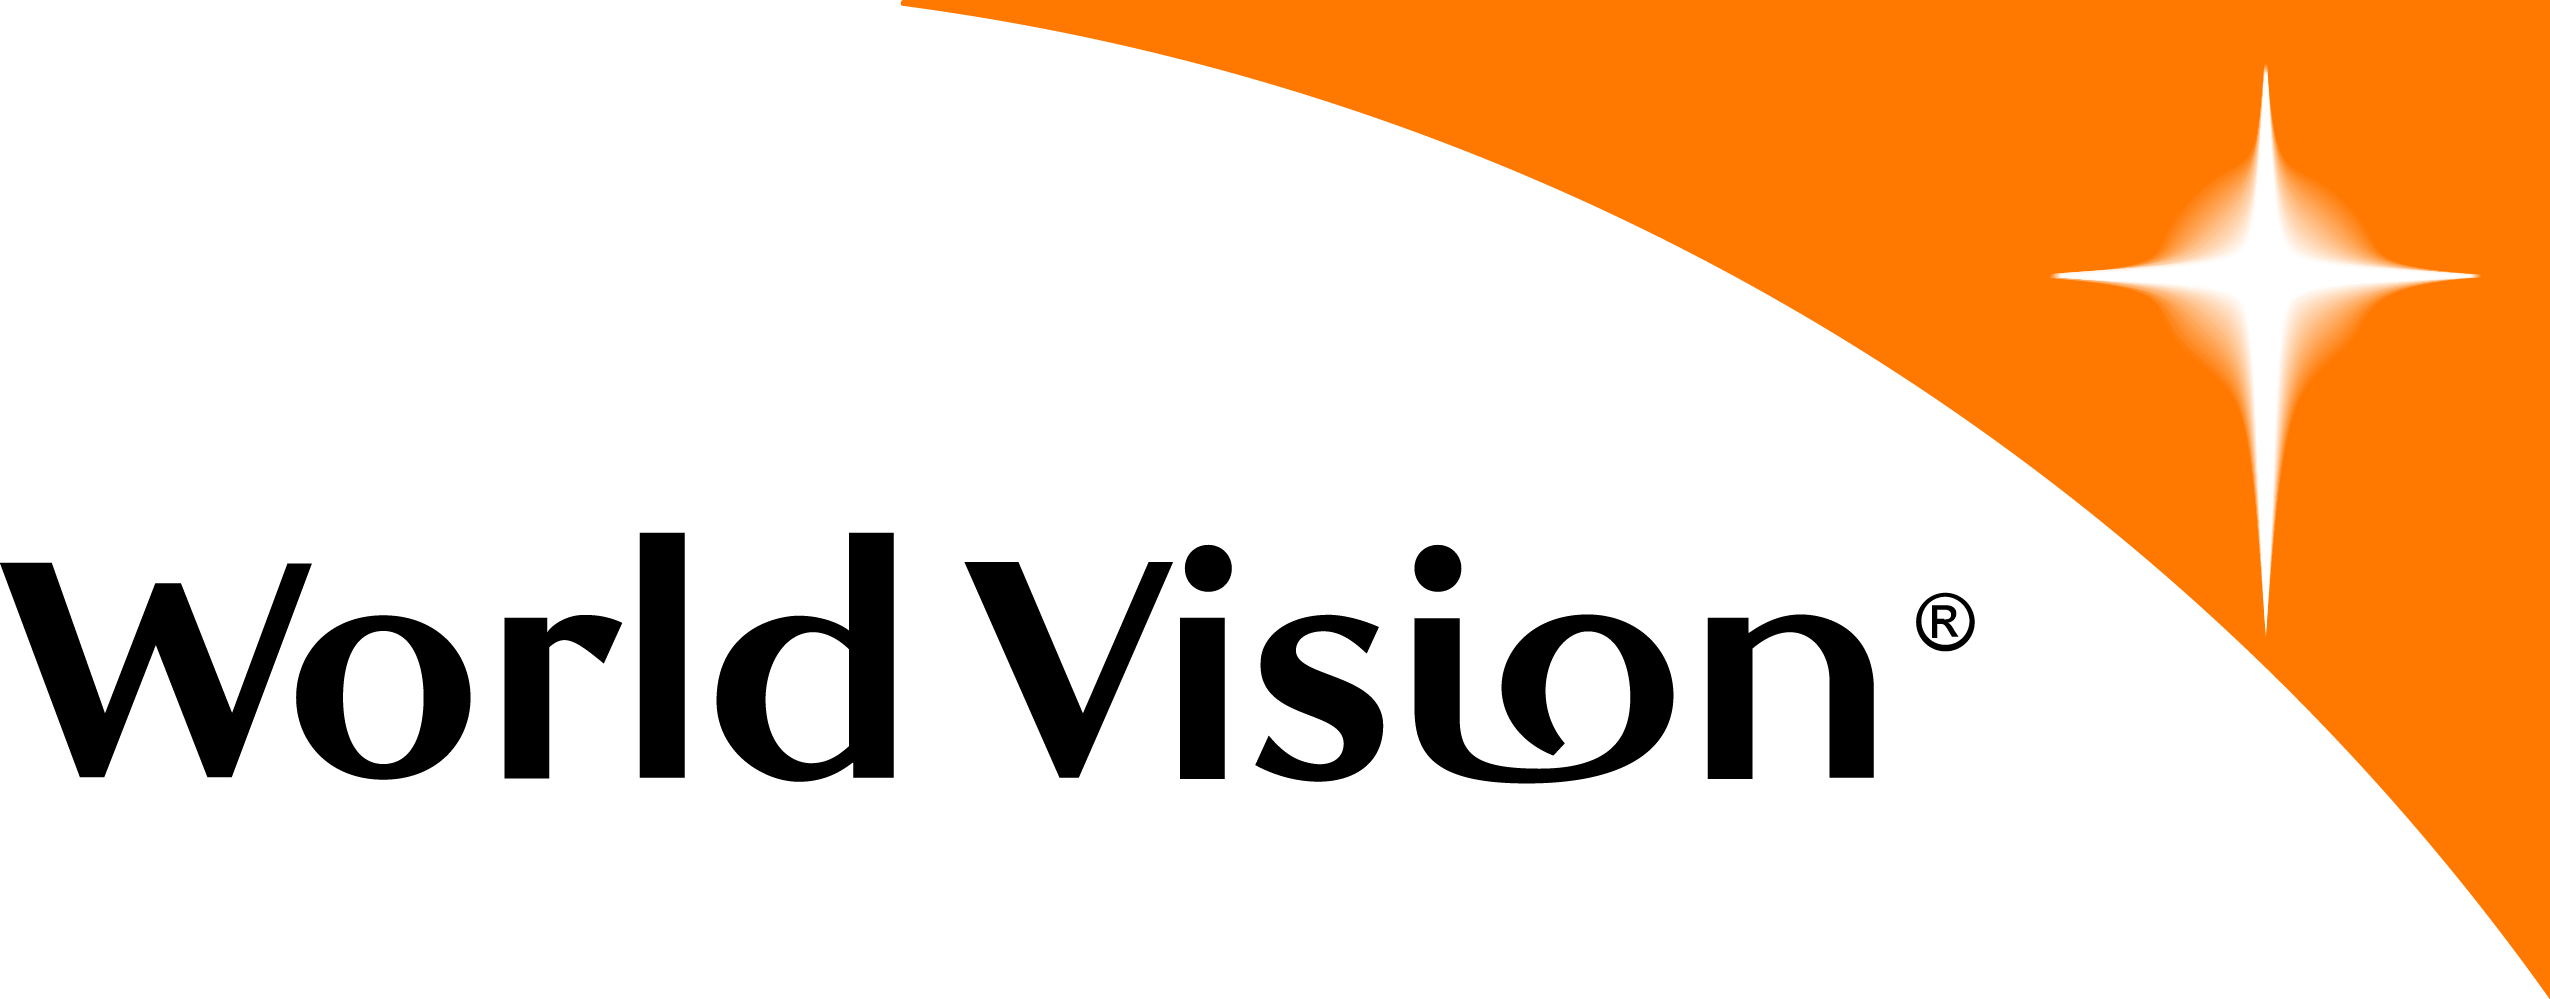 World Vision Logo - World Vision (4057x1590)